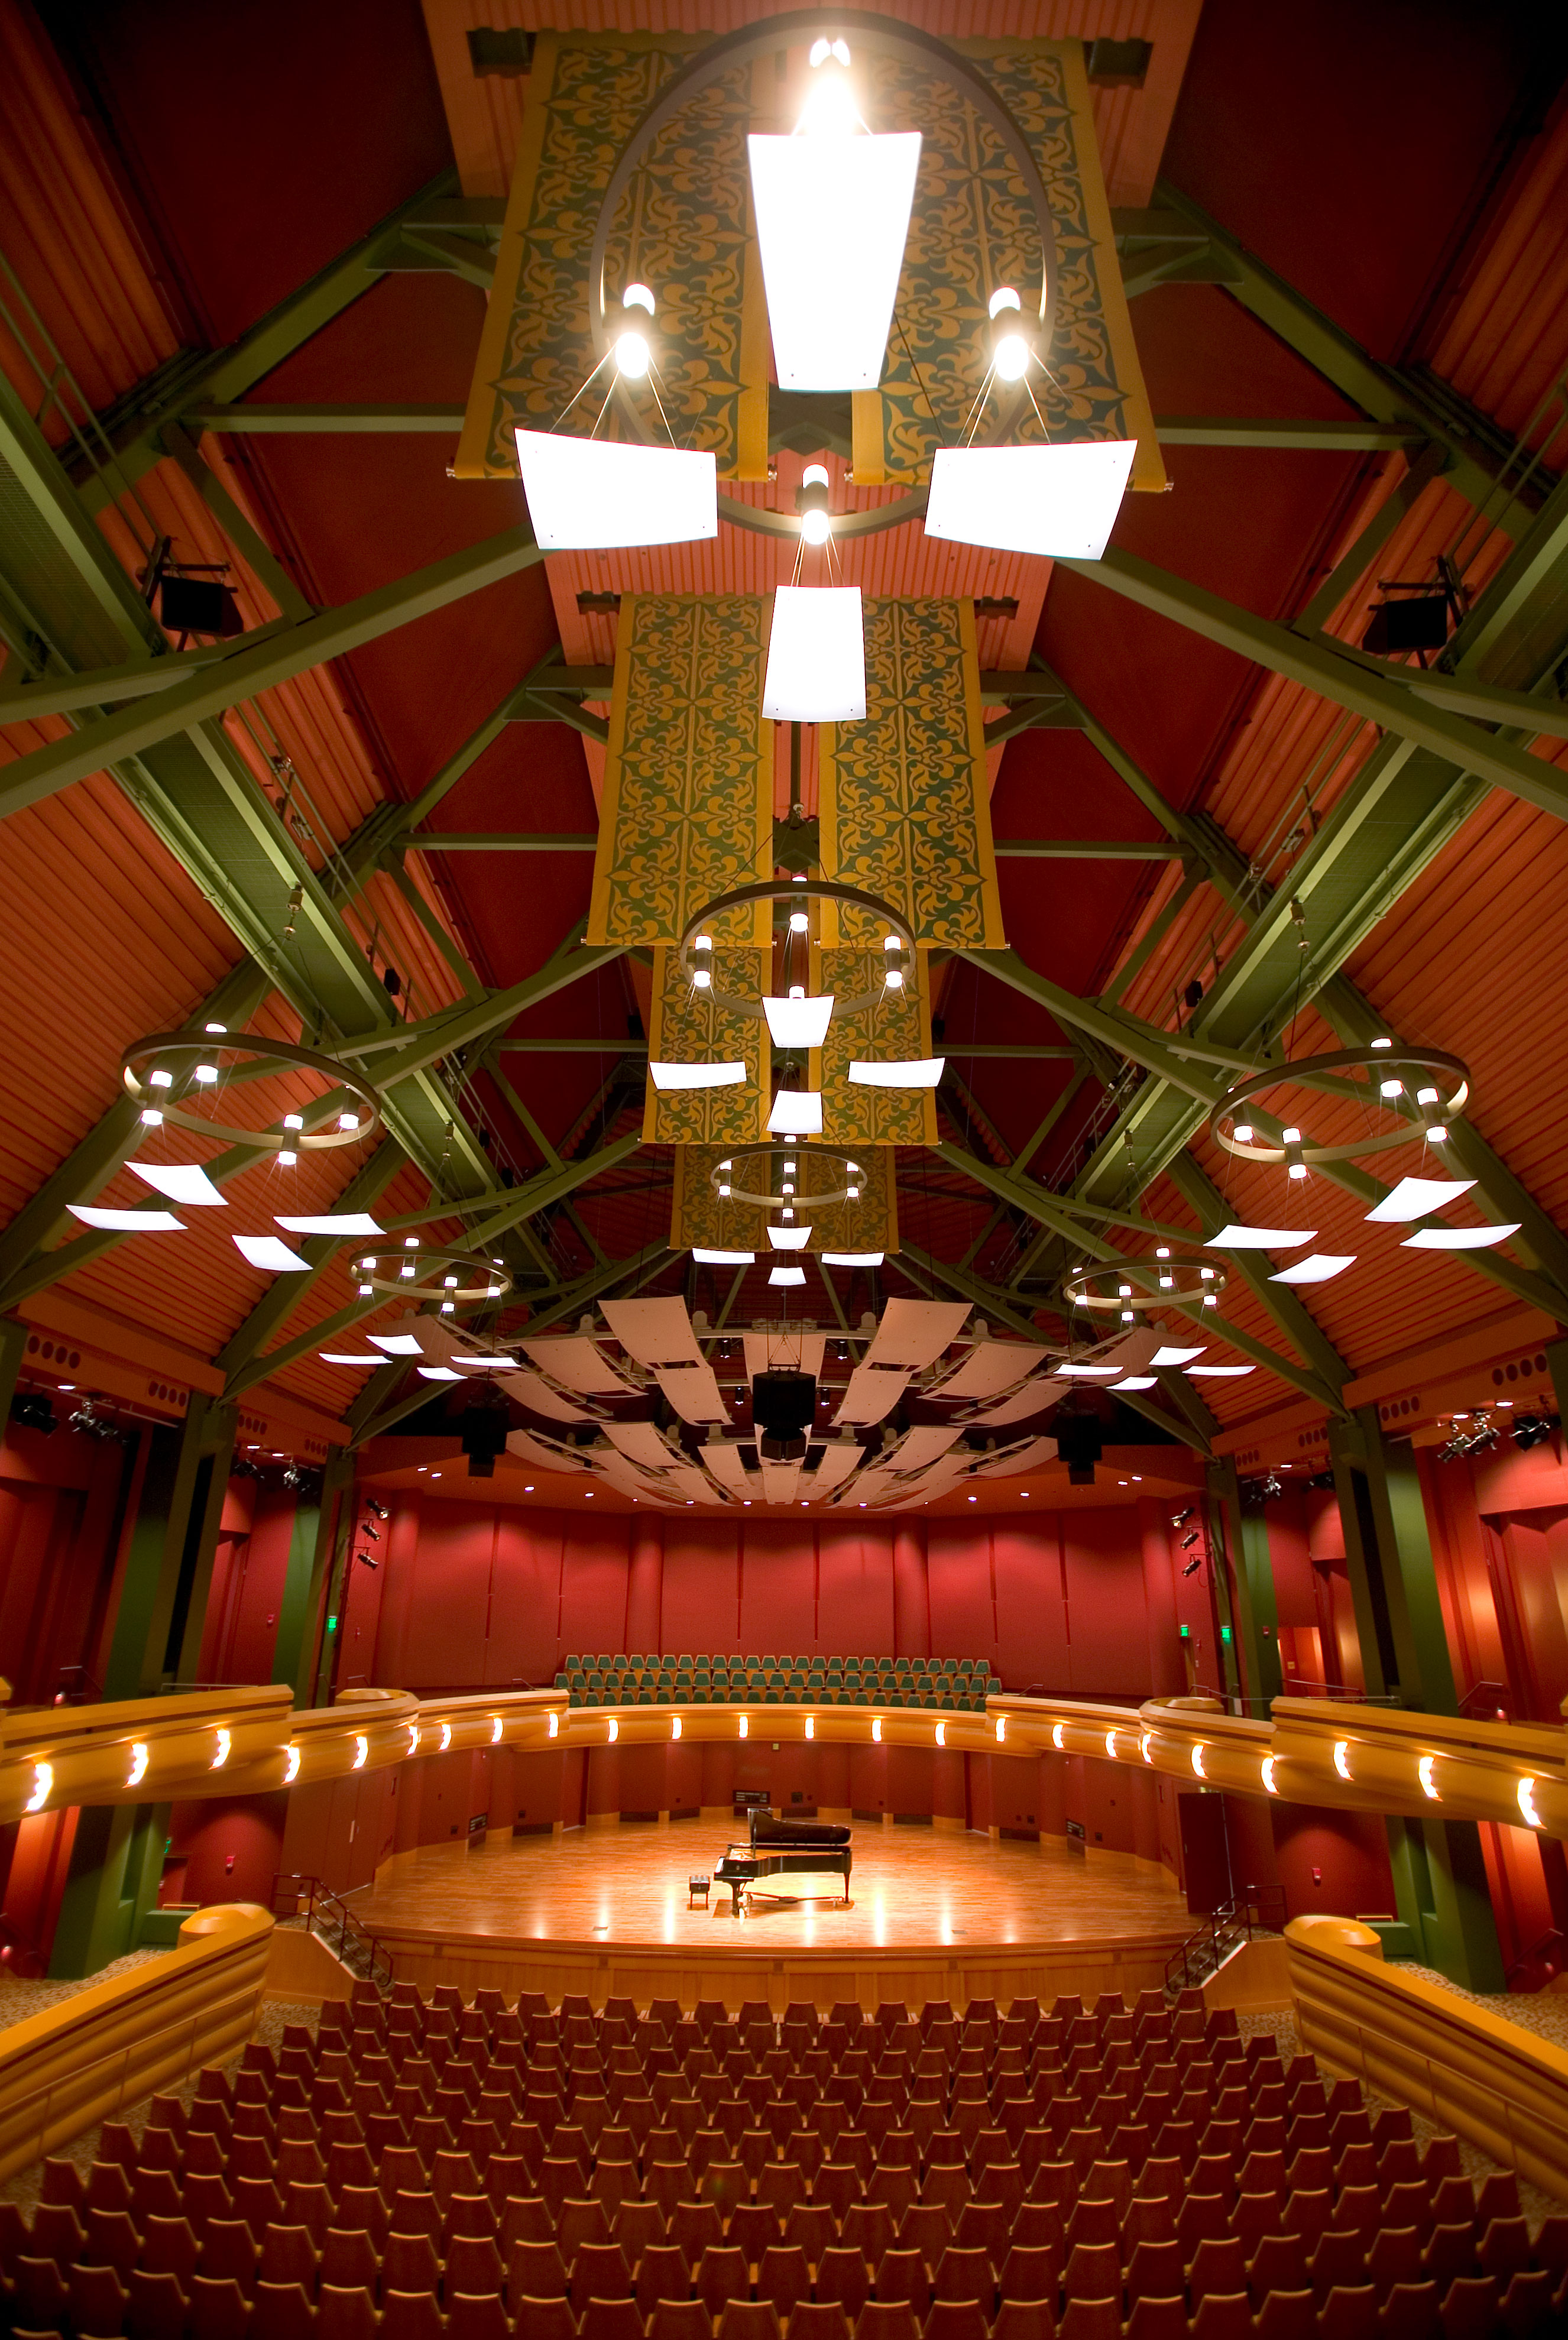 Leighton Concert Hall